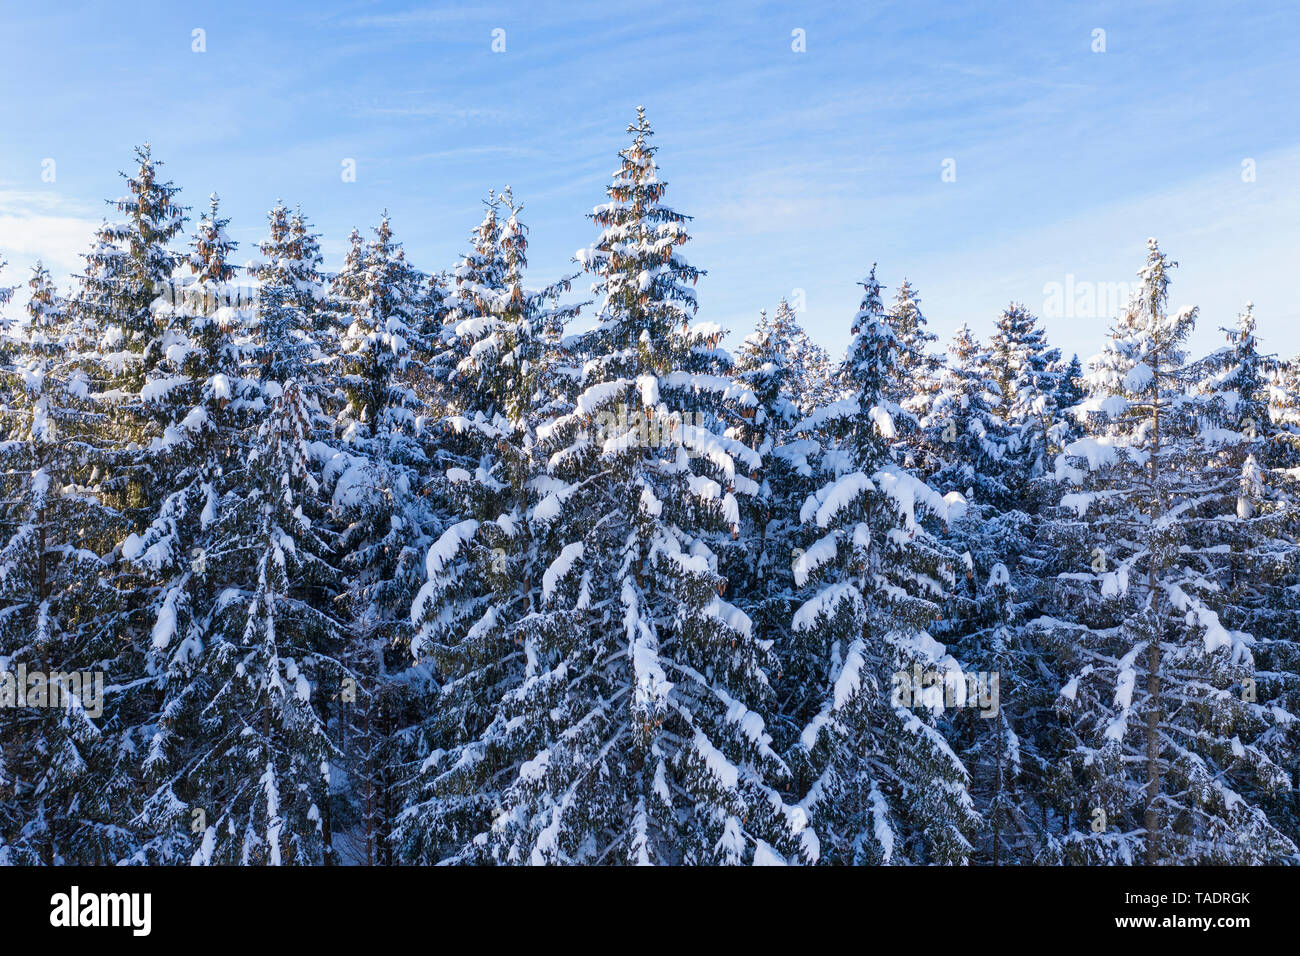 Germany, Bavaria, snowy spruce forest Stock Photo